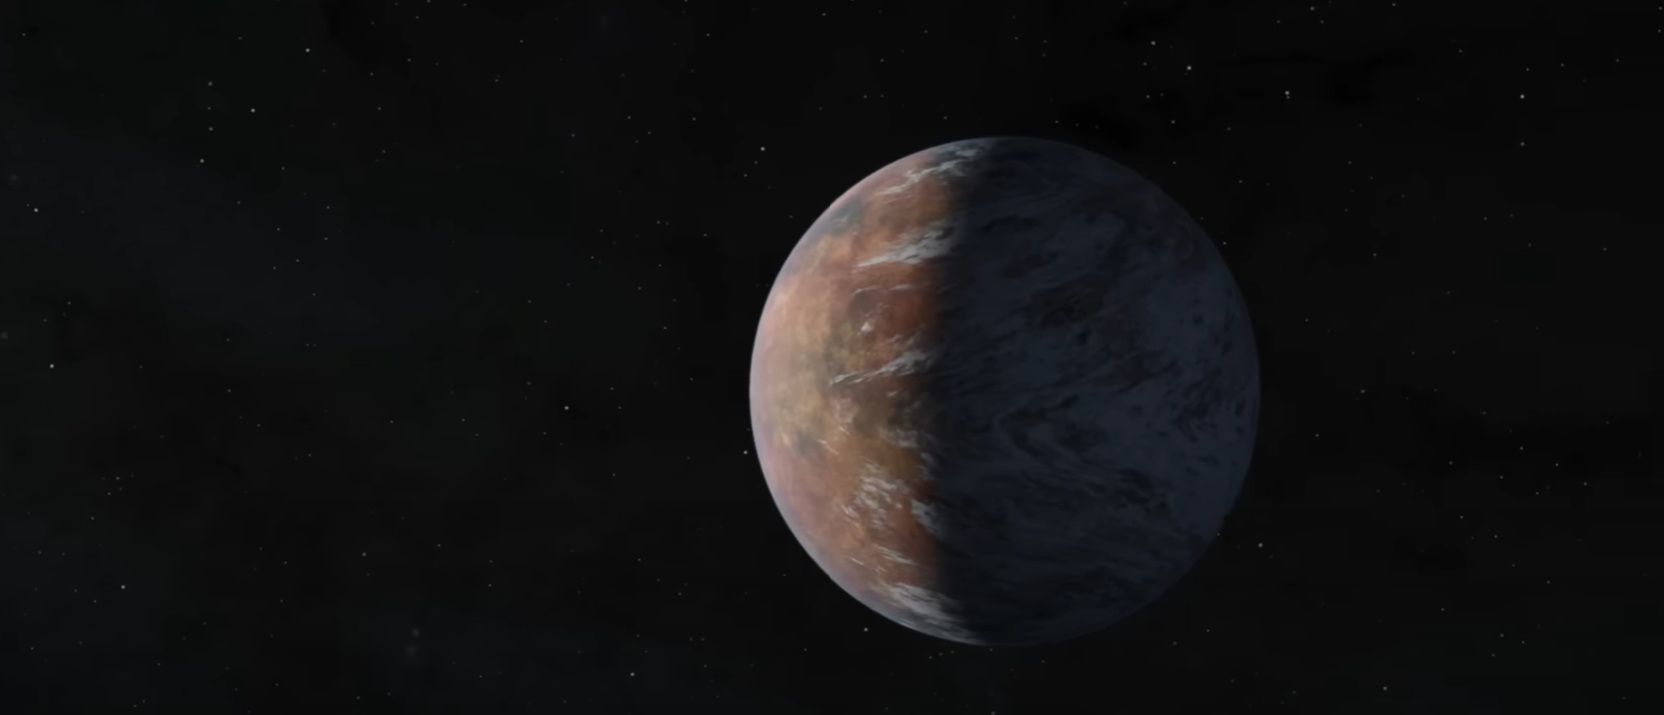 Планета toi 1452b. Toi 700. Планеты Размеры. Планета за 10 световых лет. НАСА нашли новую планету.